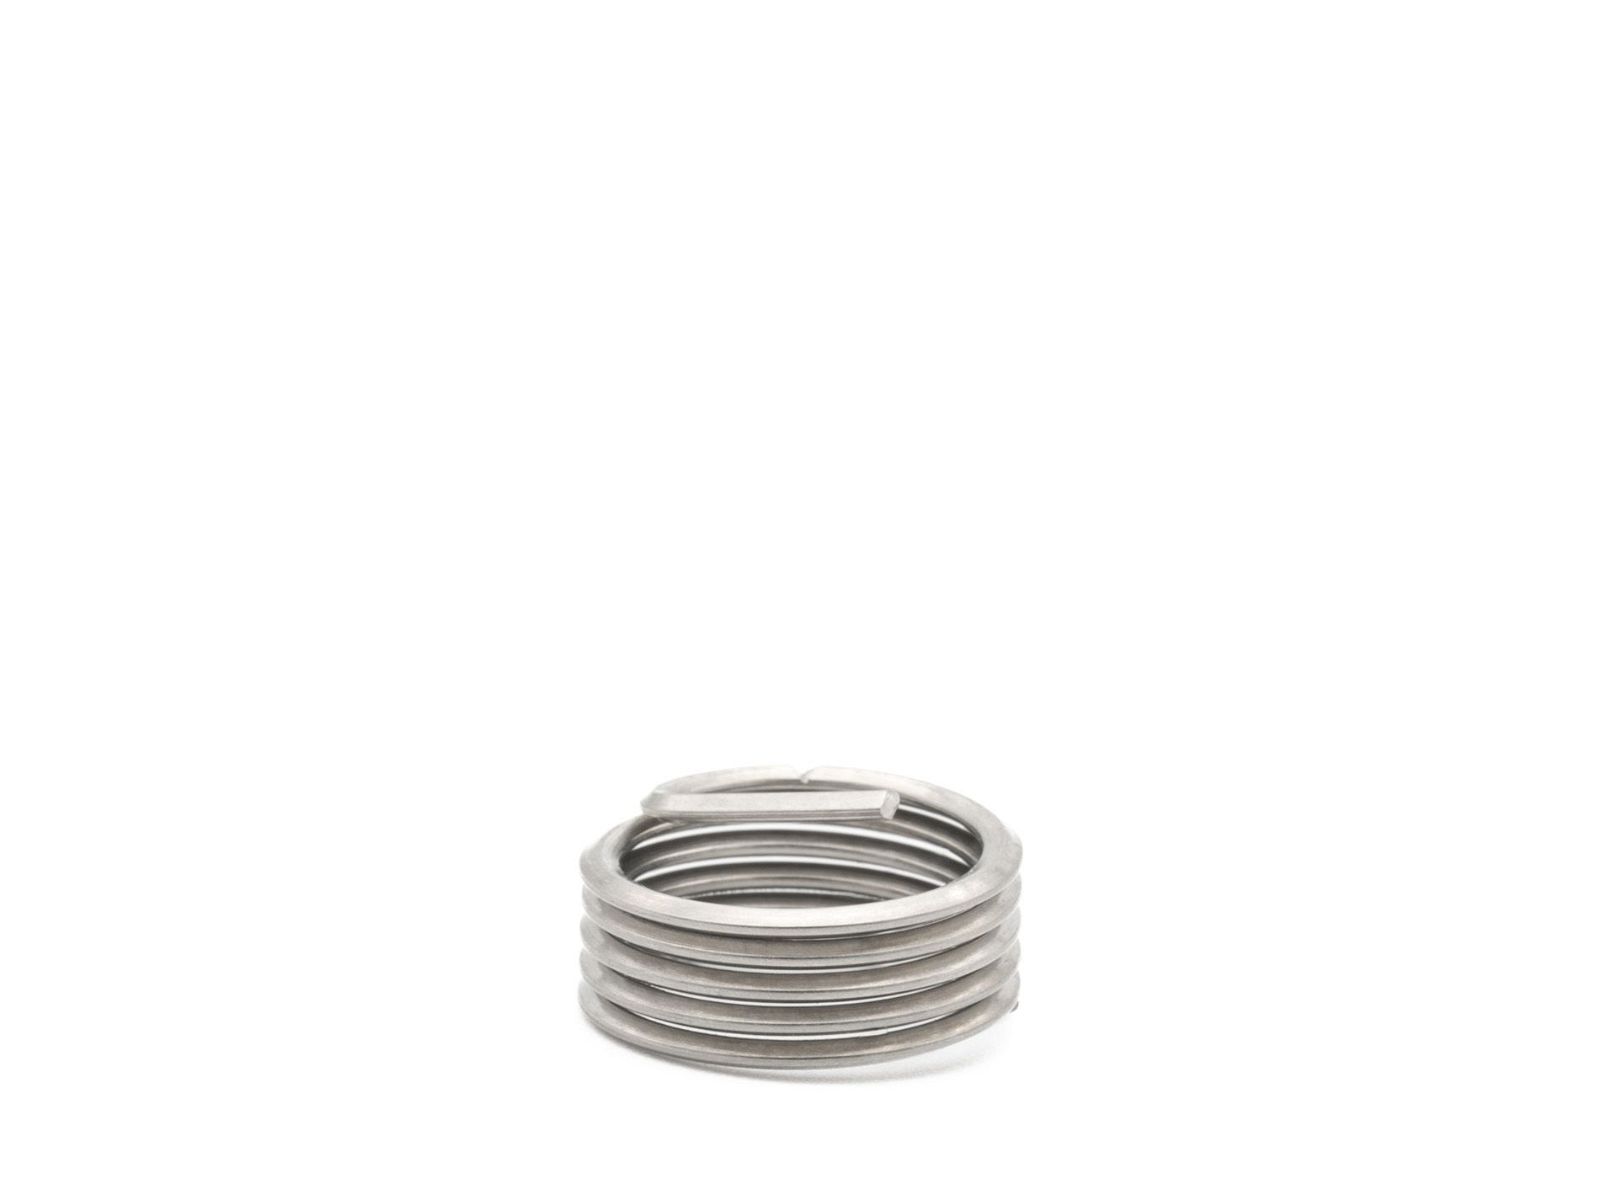 BaerCoil Wire Thread Inserts G (BSP) 7/8 x 14 – 2.0 D (44.45 mm) - free running - 5 pcs.